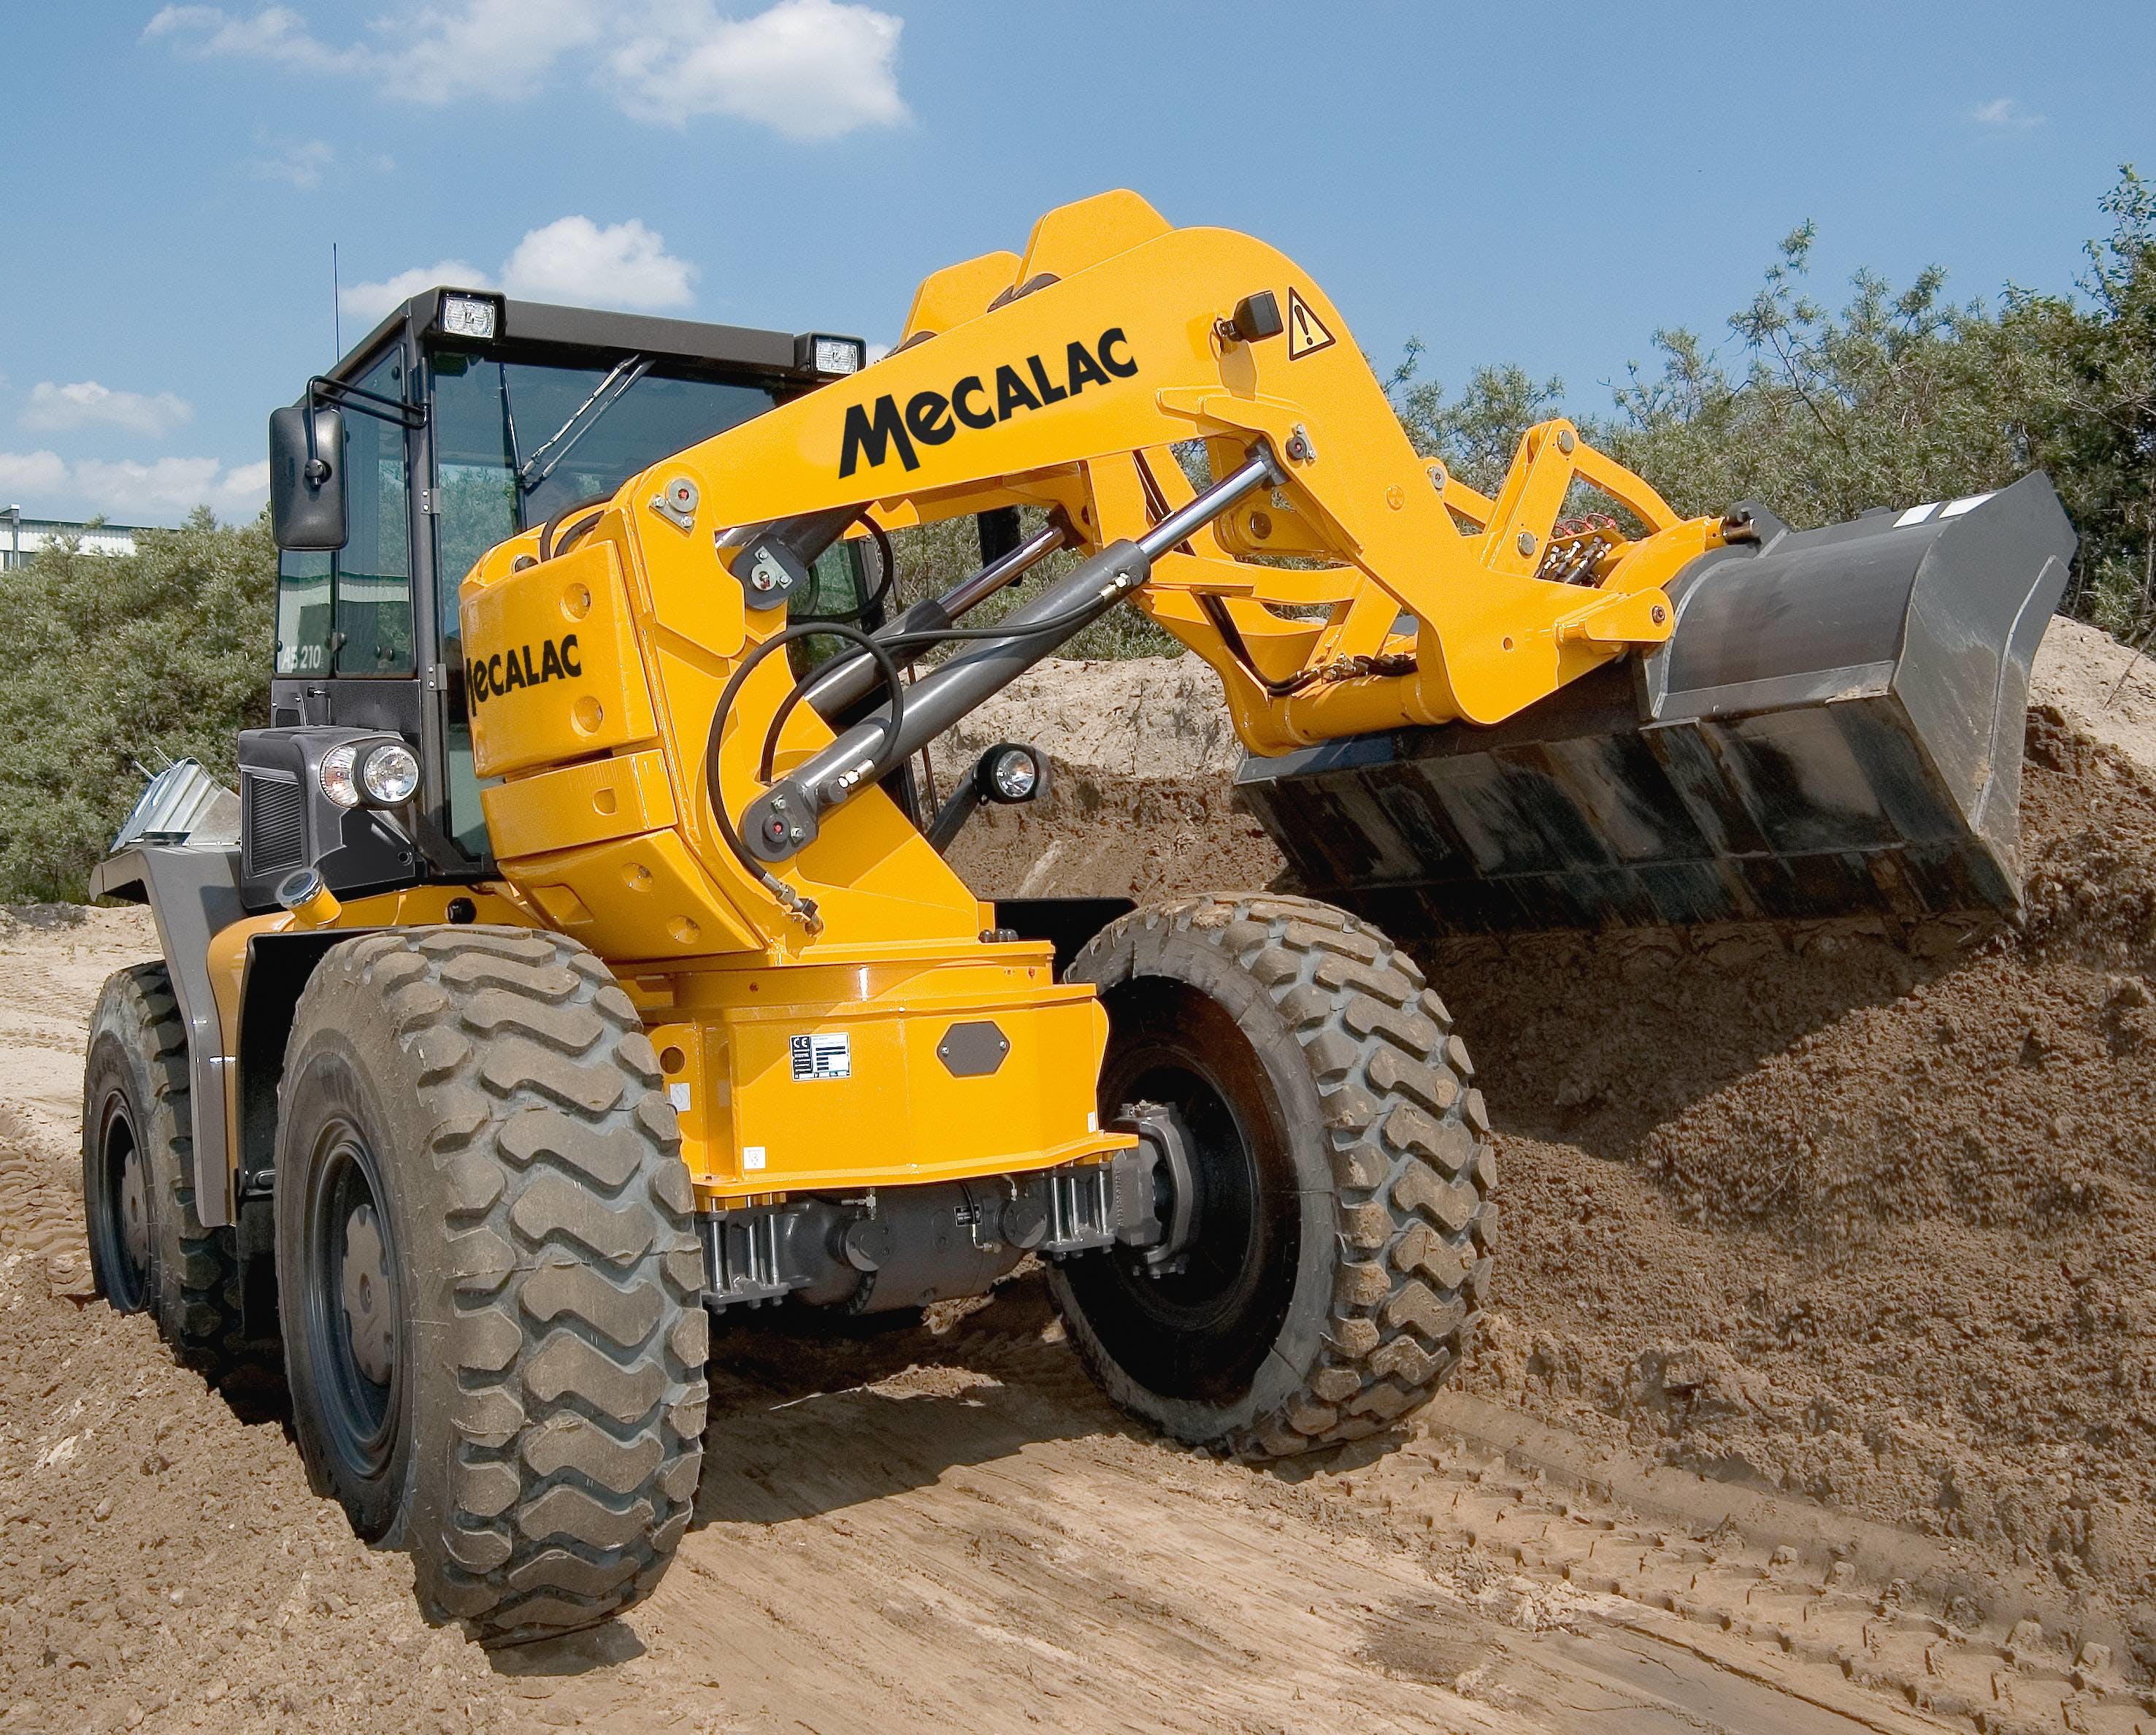 Mecalac AS210 wheel loader digging in pile of dirt